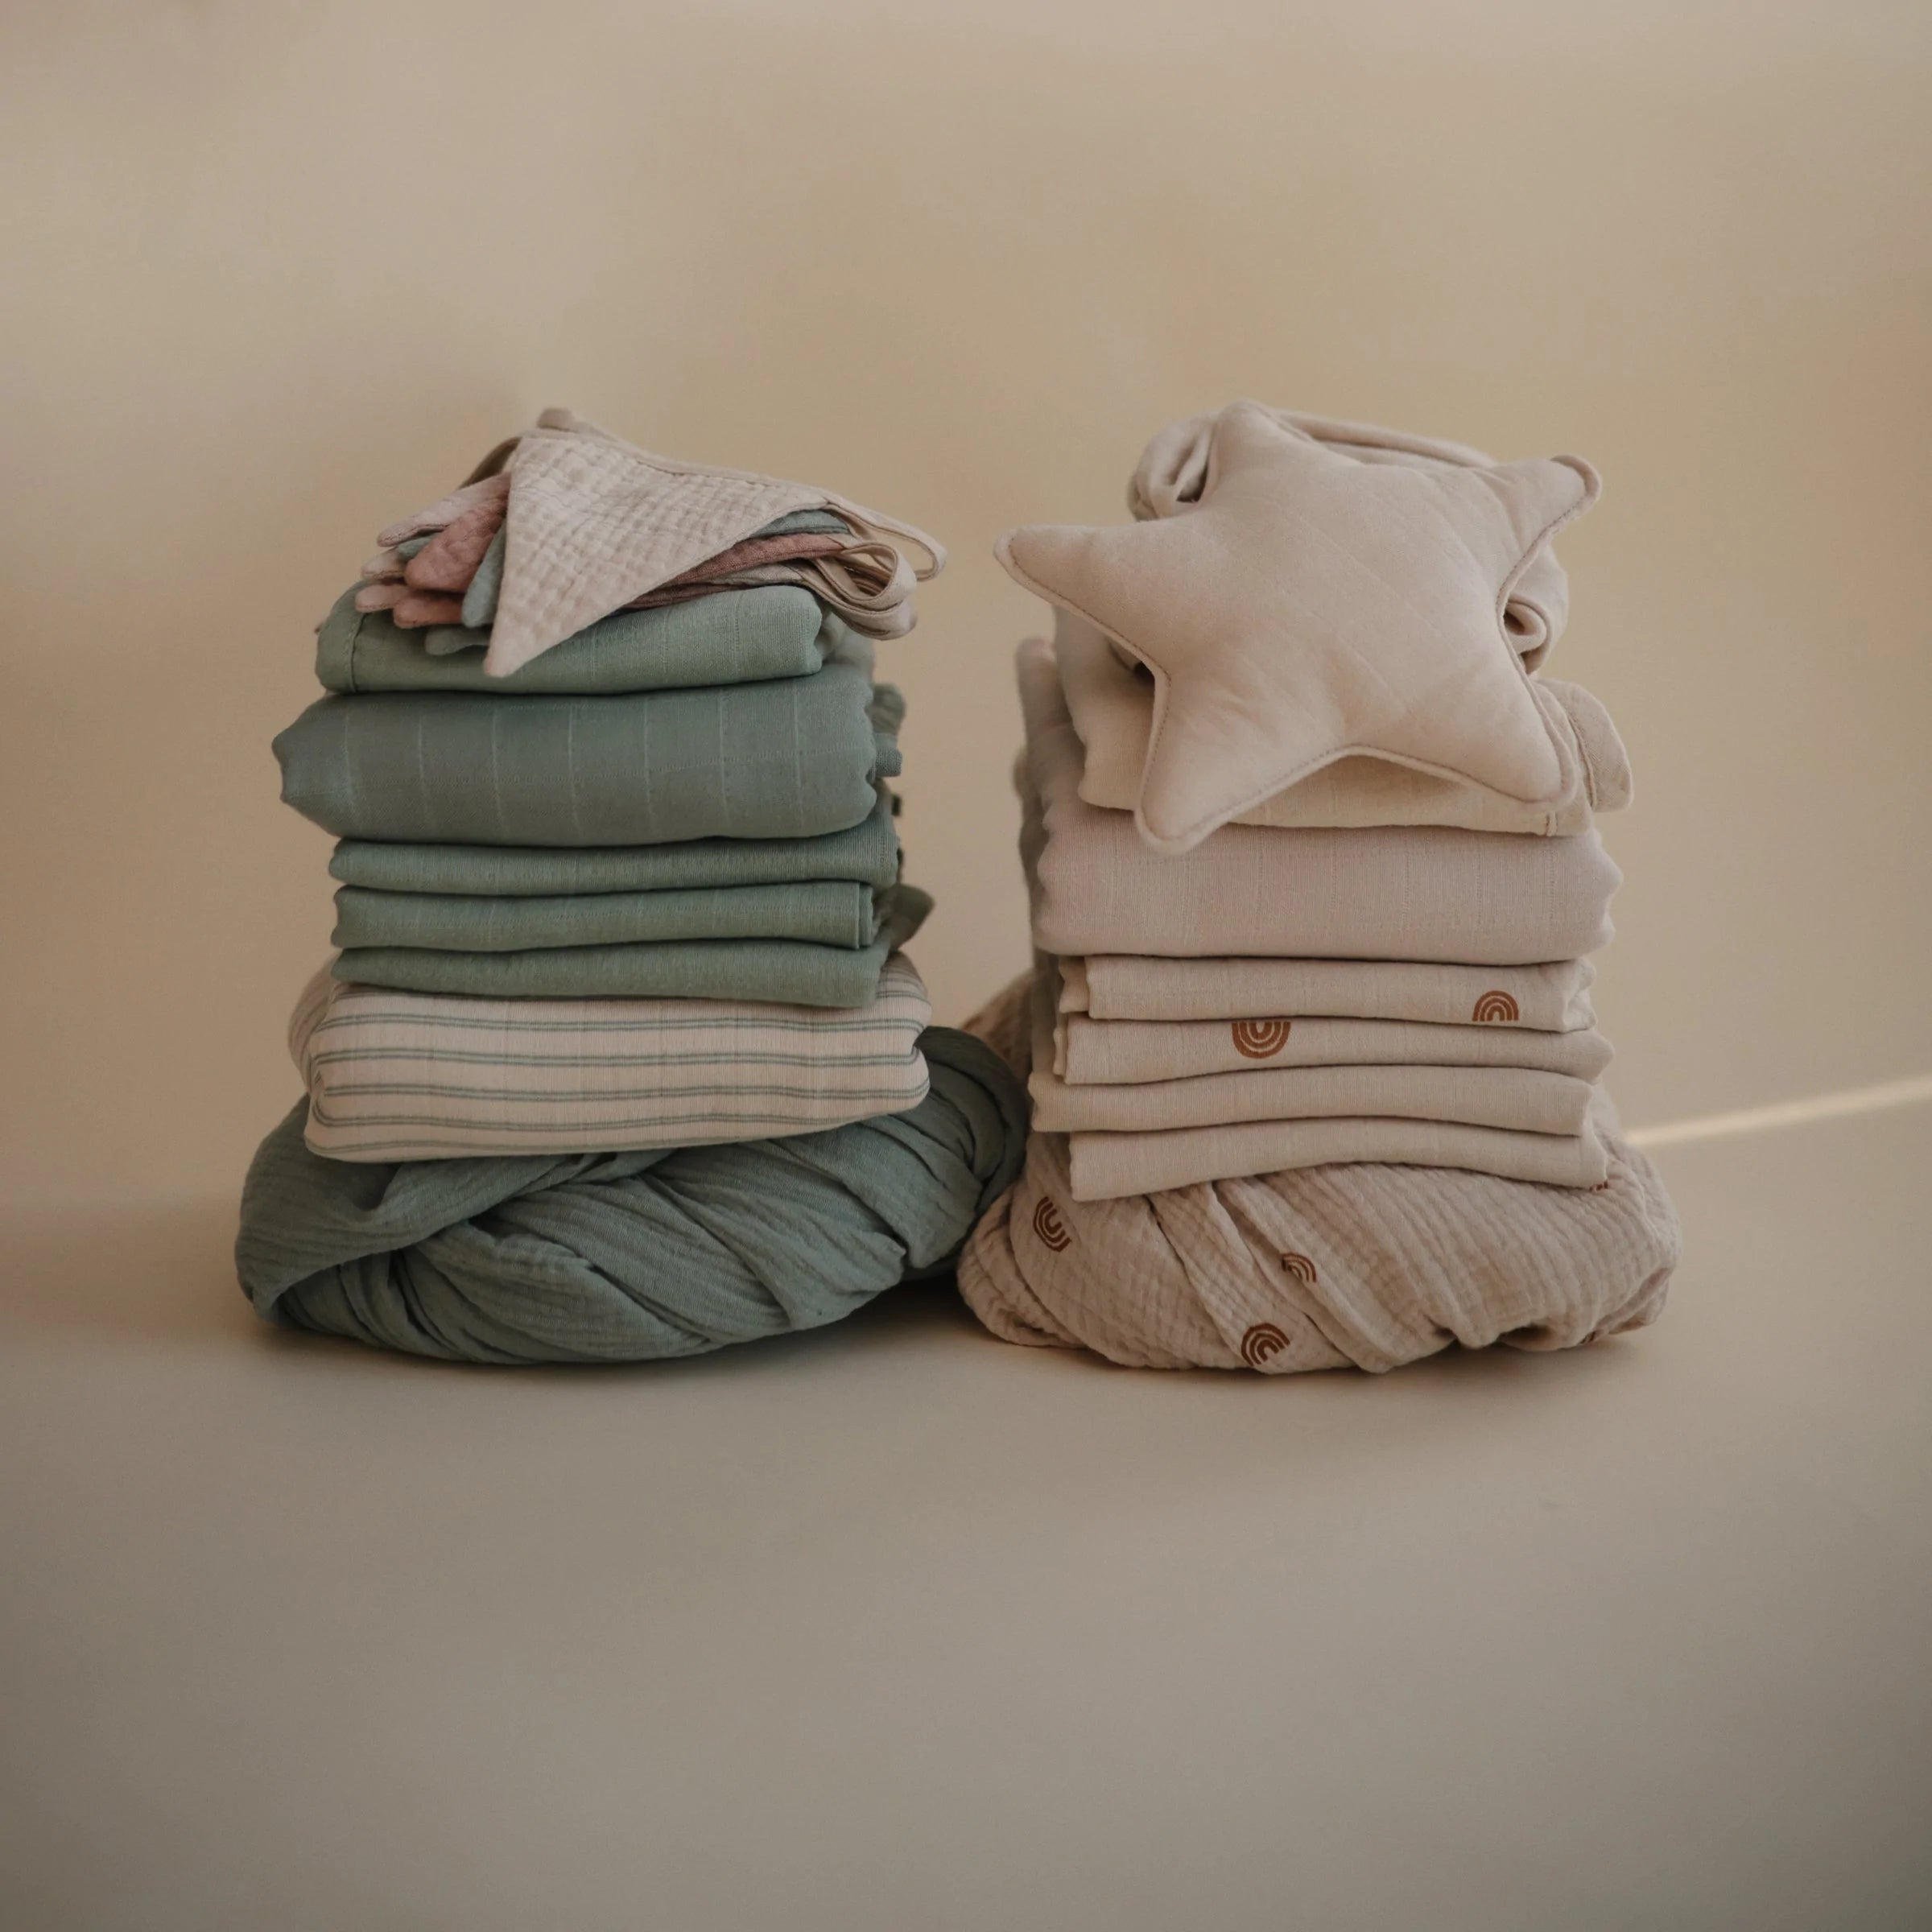 Mushie Muslin Burp Cloth Organic Cotton 2-Pack | Retro Flowers/Fog